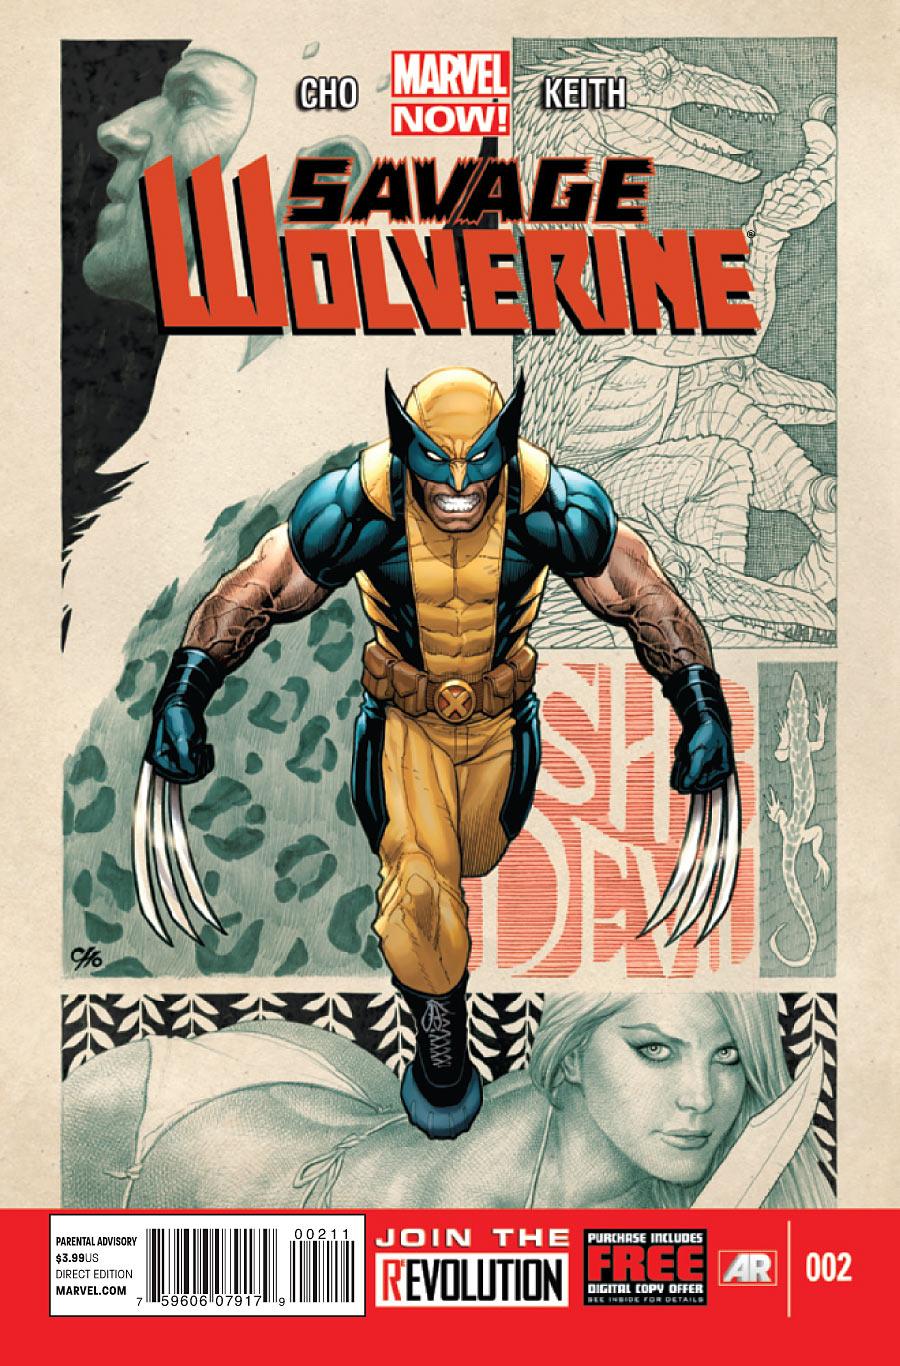 Savage Wolverine Vol. 1 #2